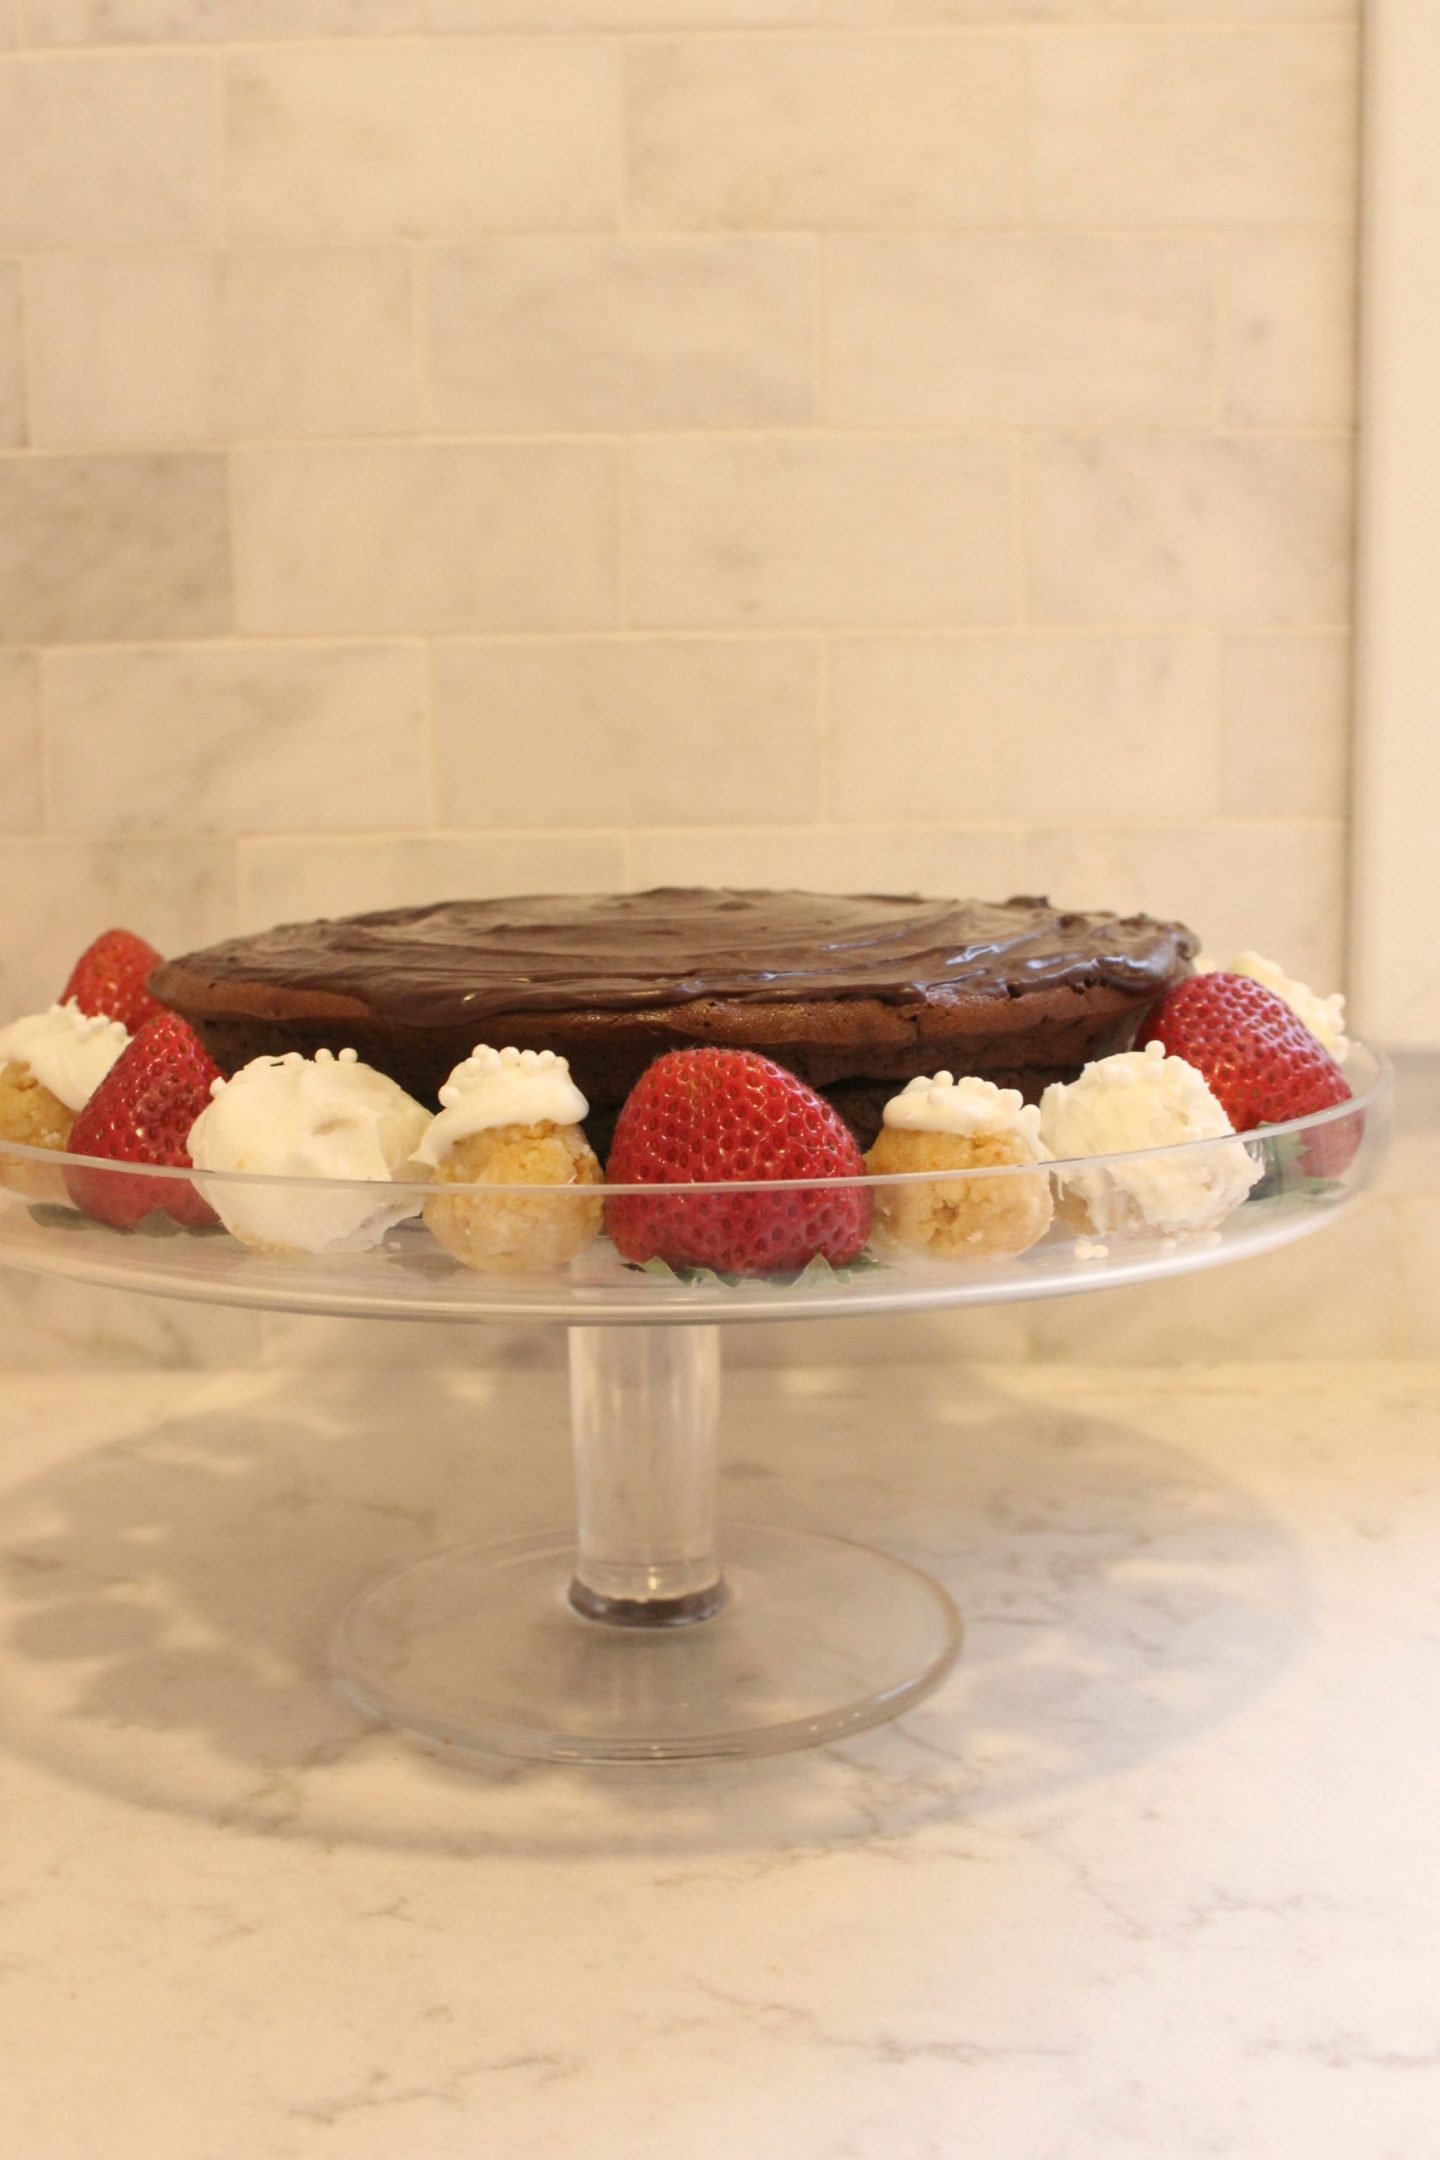 Gluten free chocolate cake with ganache, berries, and sugar cookie truffles